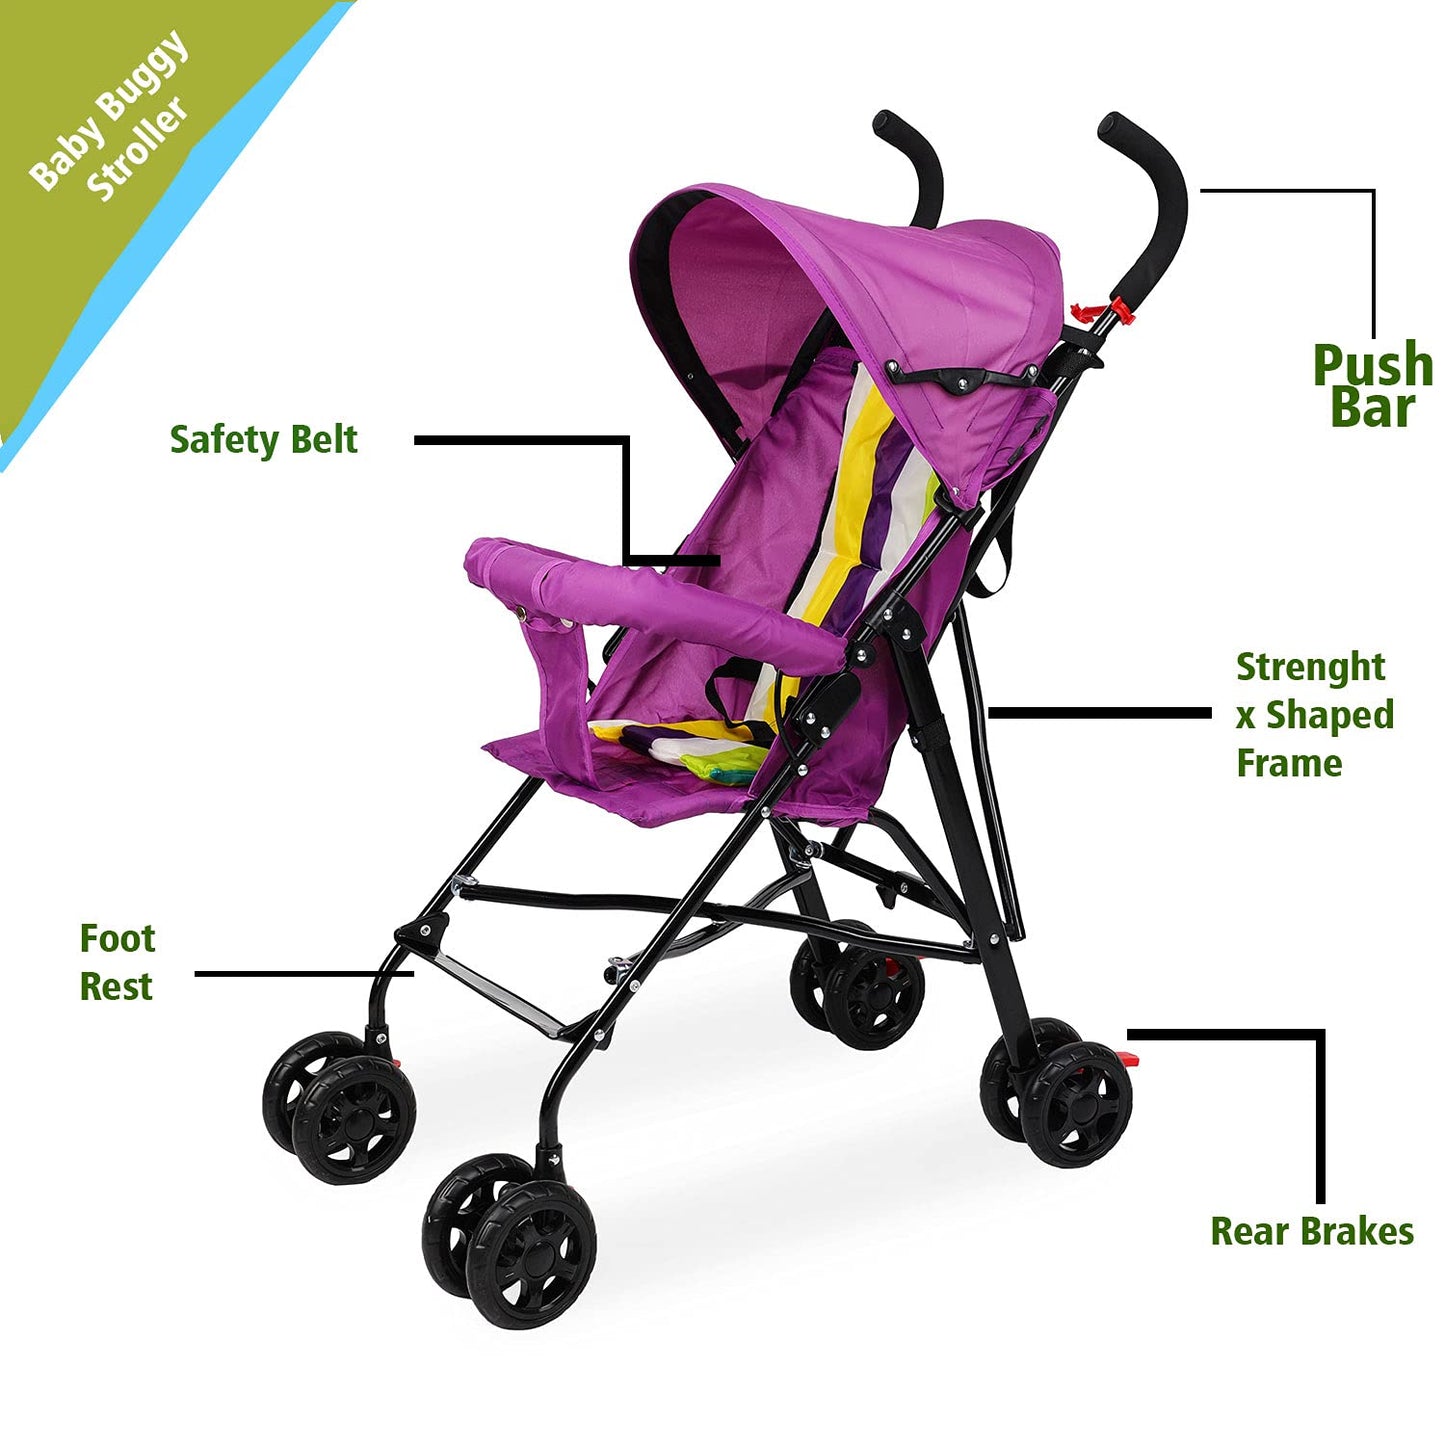 GettBoles Foldable Baby Stroller for Kids-Buggy Pram for Newborn/Infants with Easy Folding, Footrest, Multi Purple